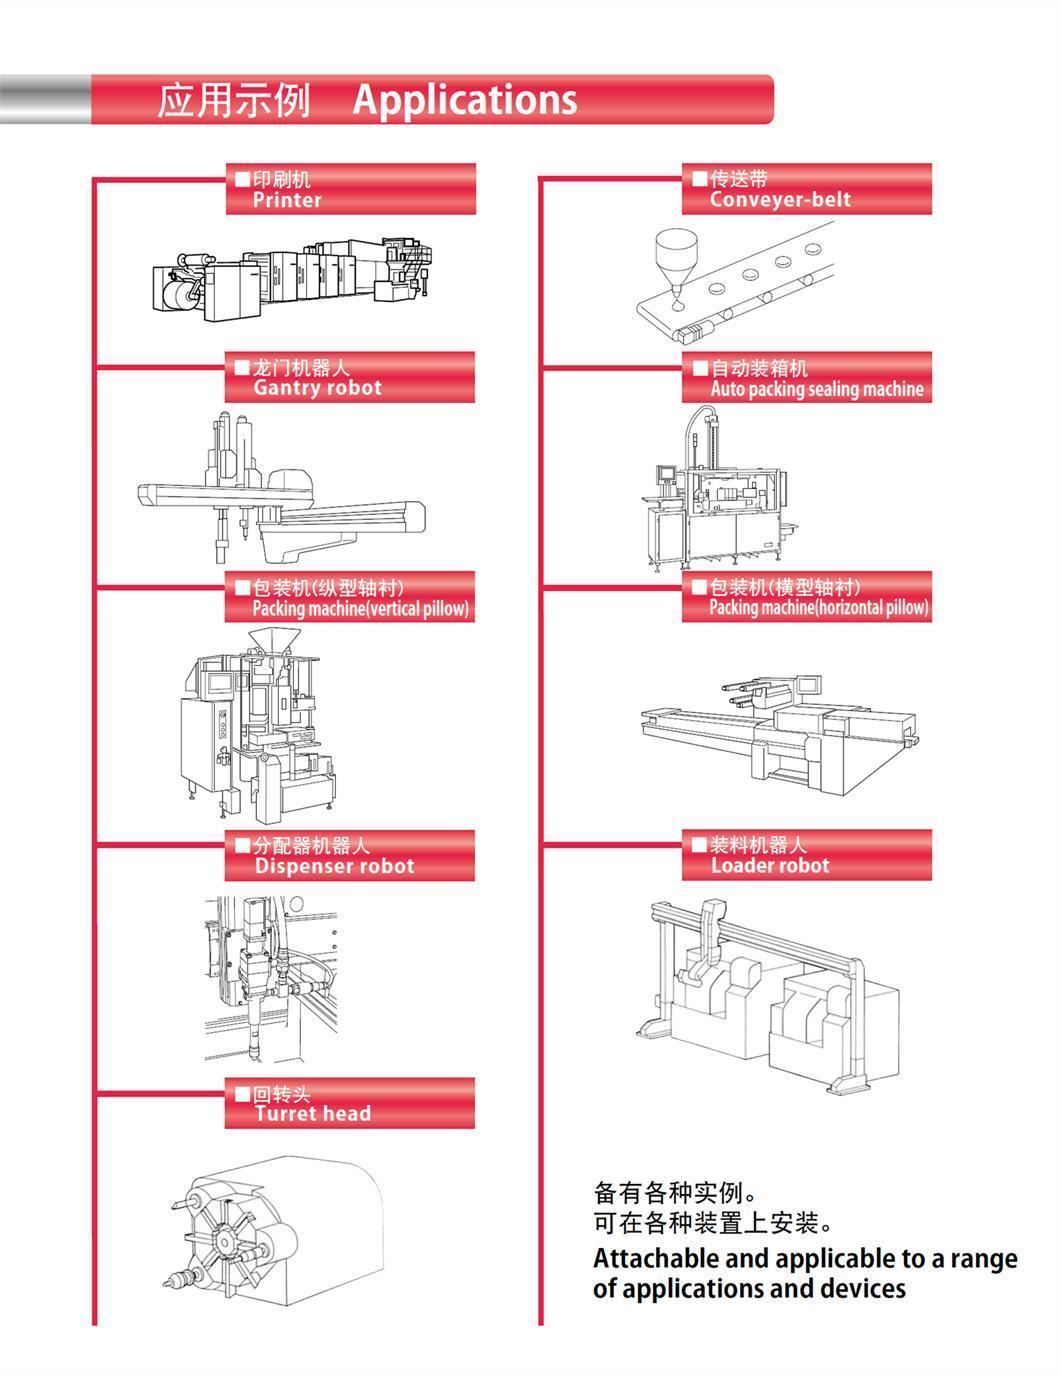 Shimpo Gearbox High-Precision Vrt-115c Series Gantry Robot Servo Motor Reducer